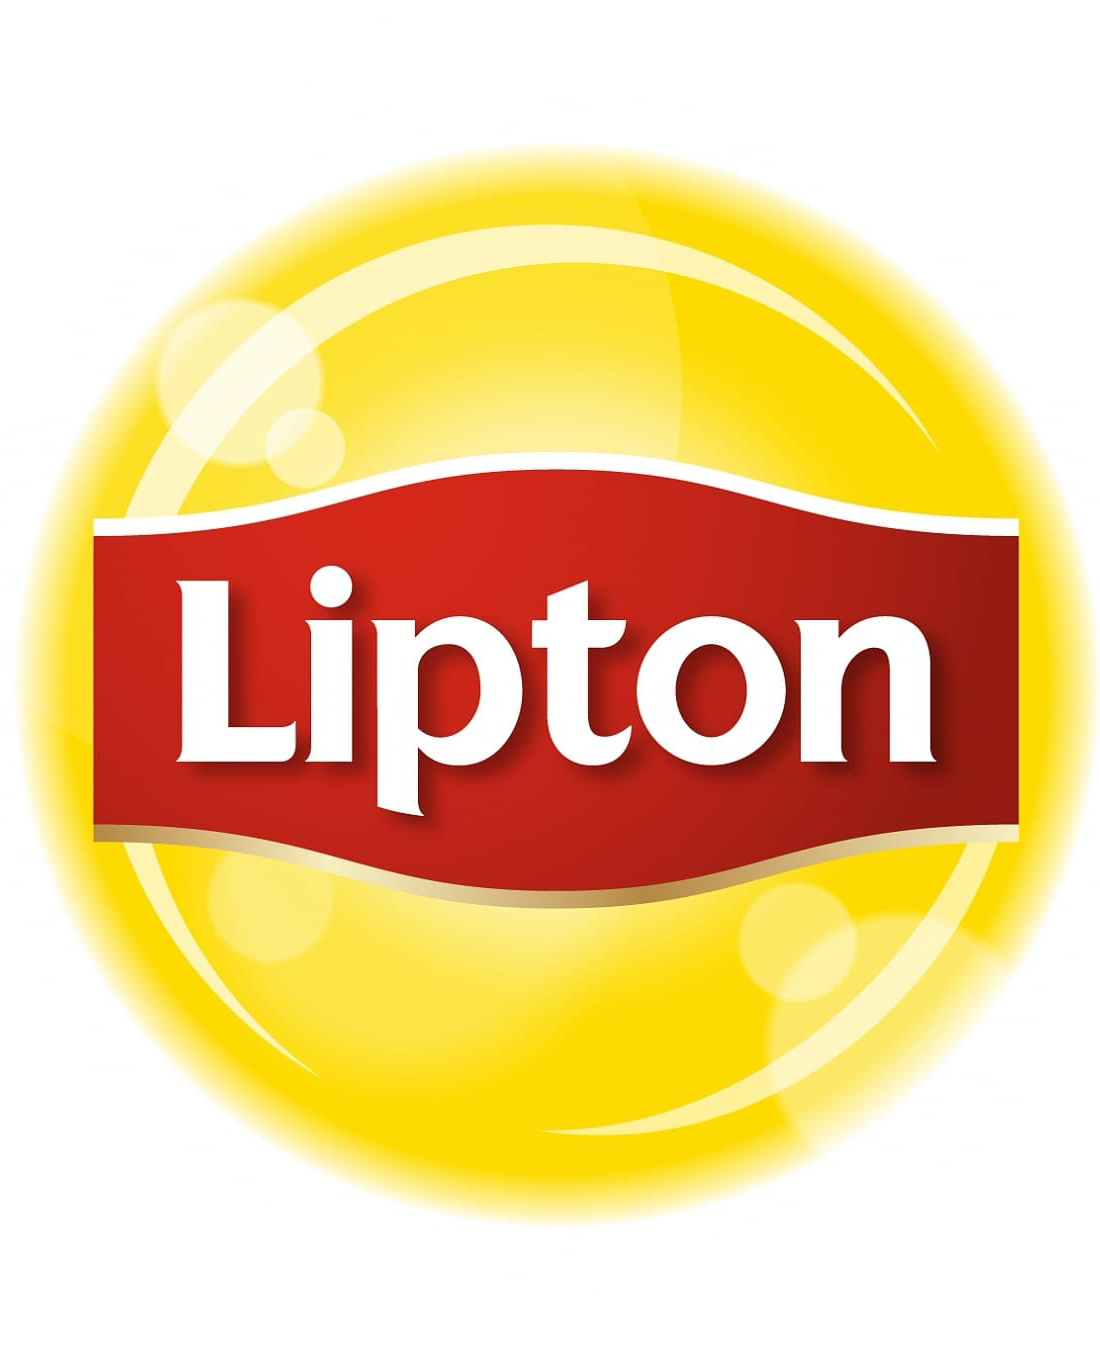 LIPTON